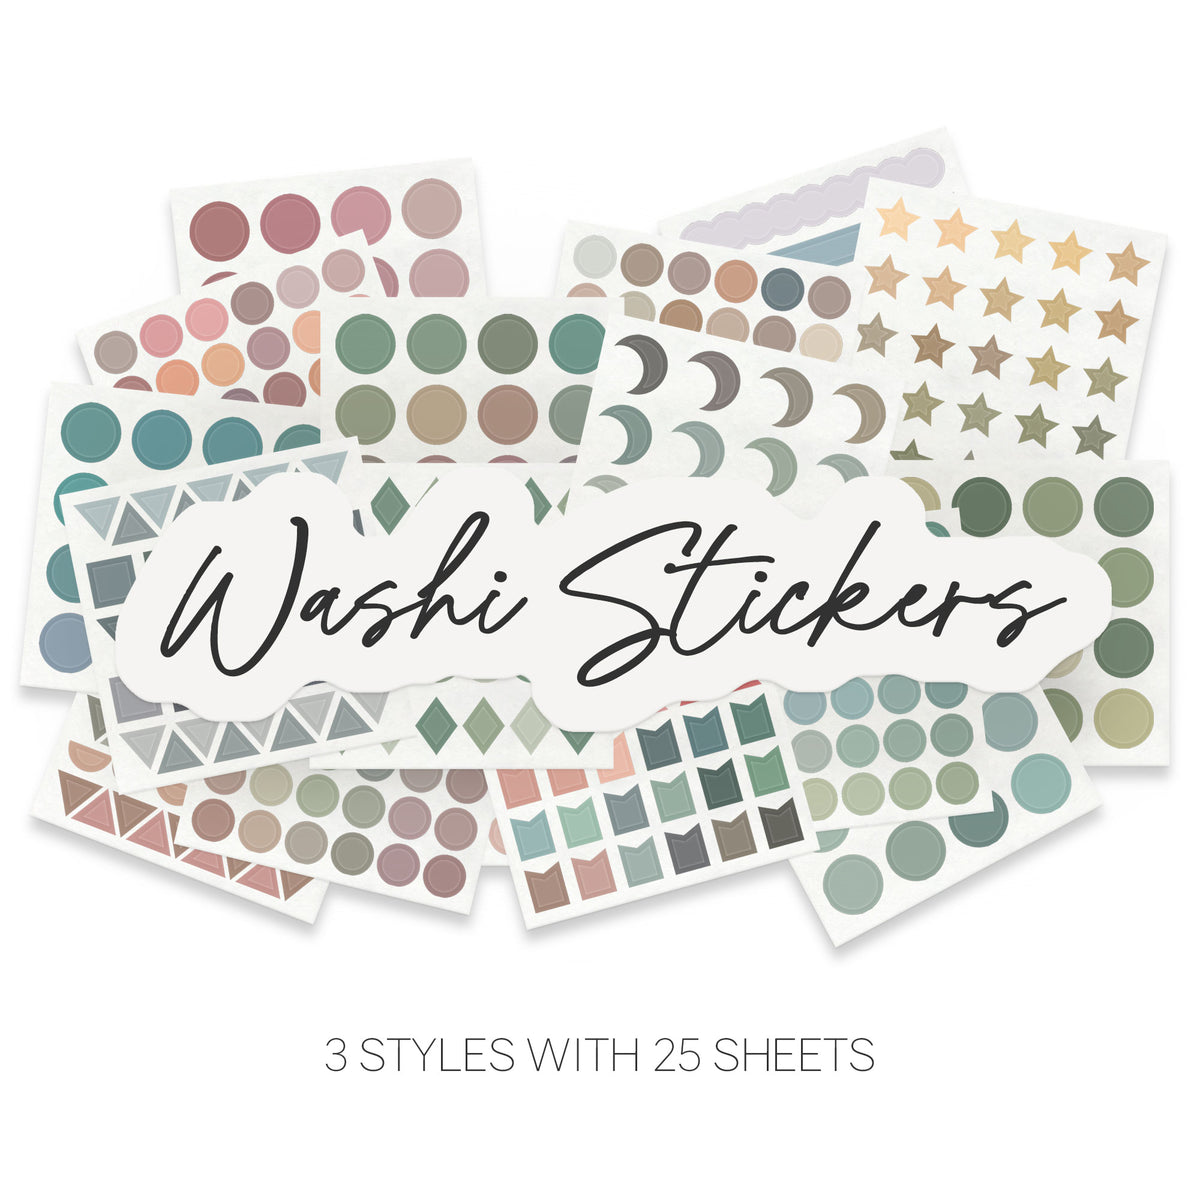 Bujo Style Marking - Washi Stickers – Wonderland222